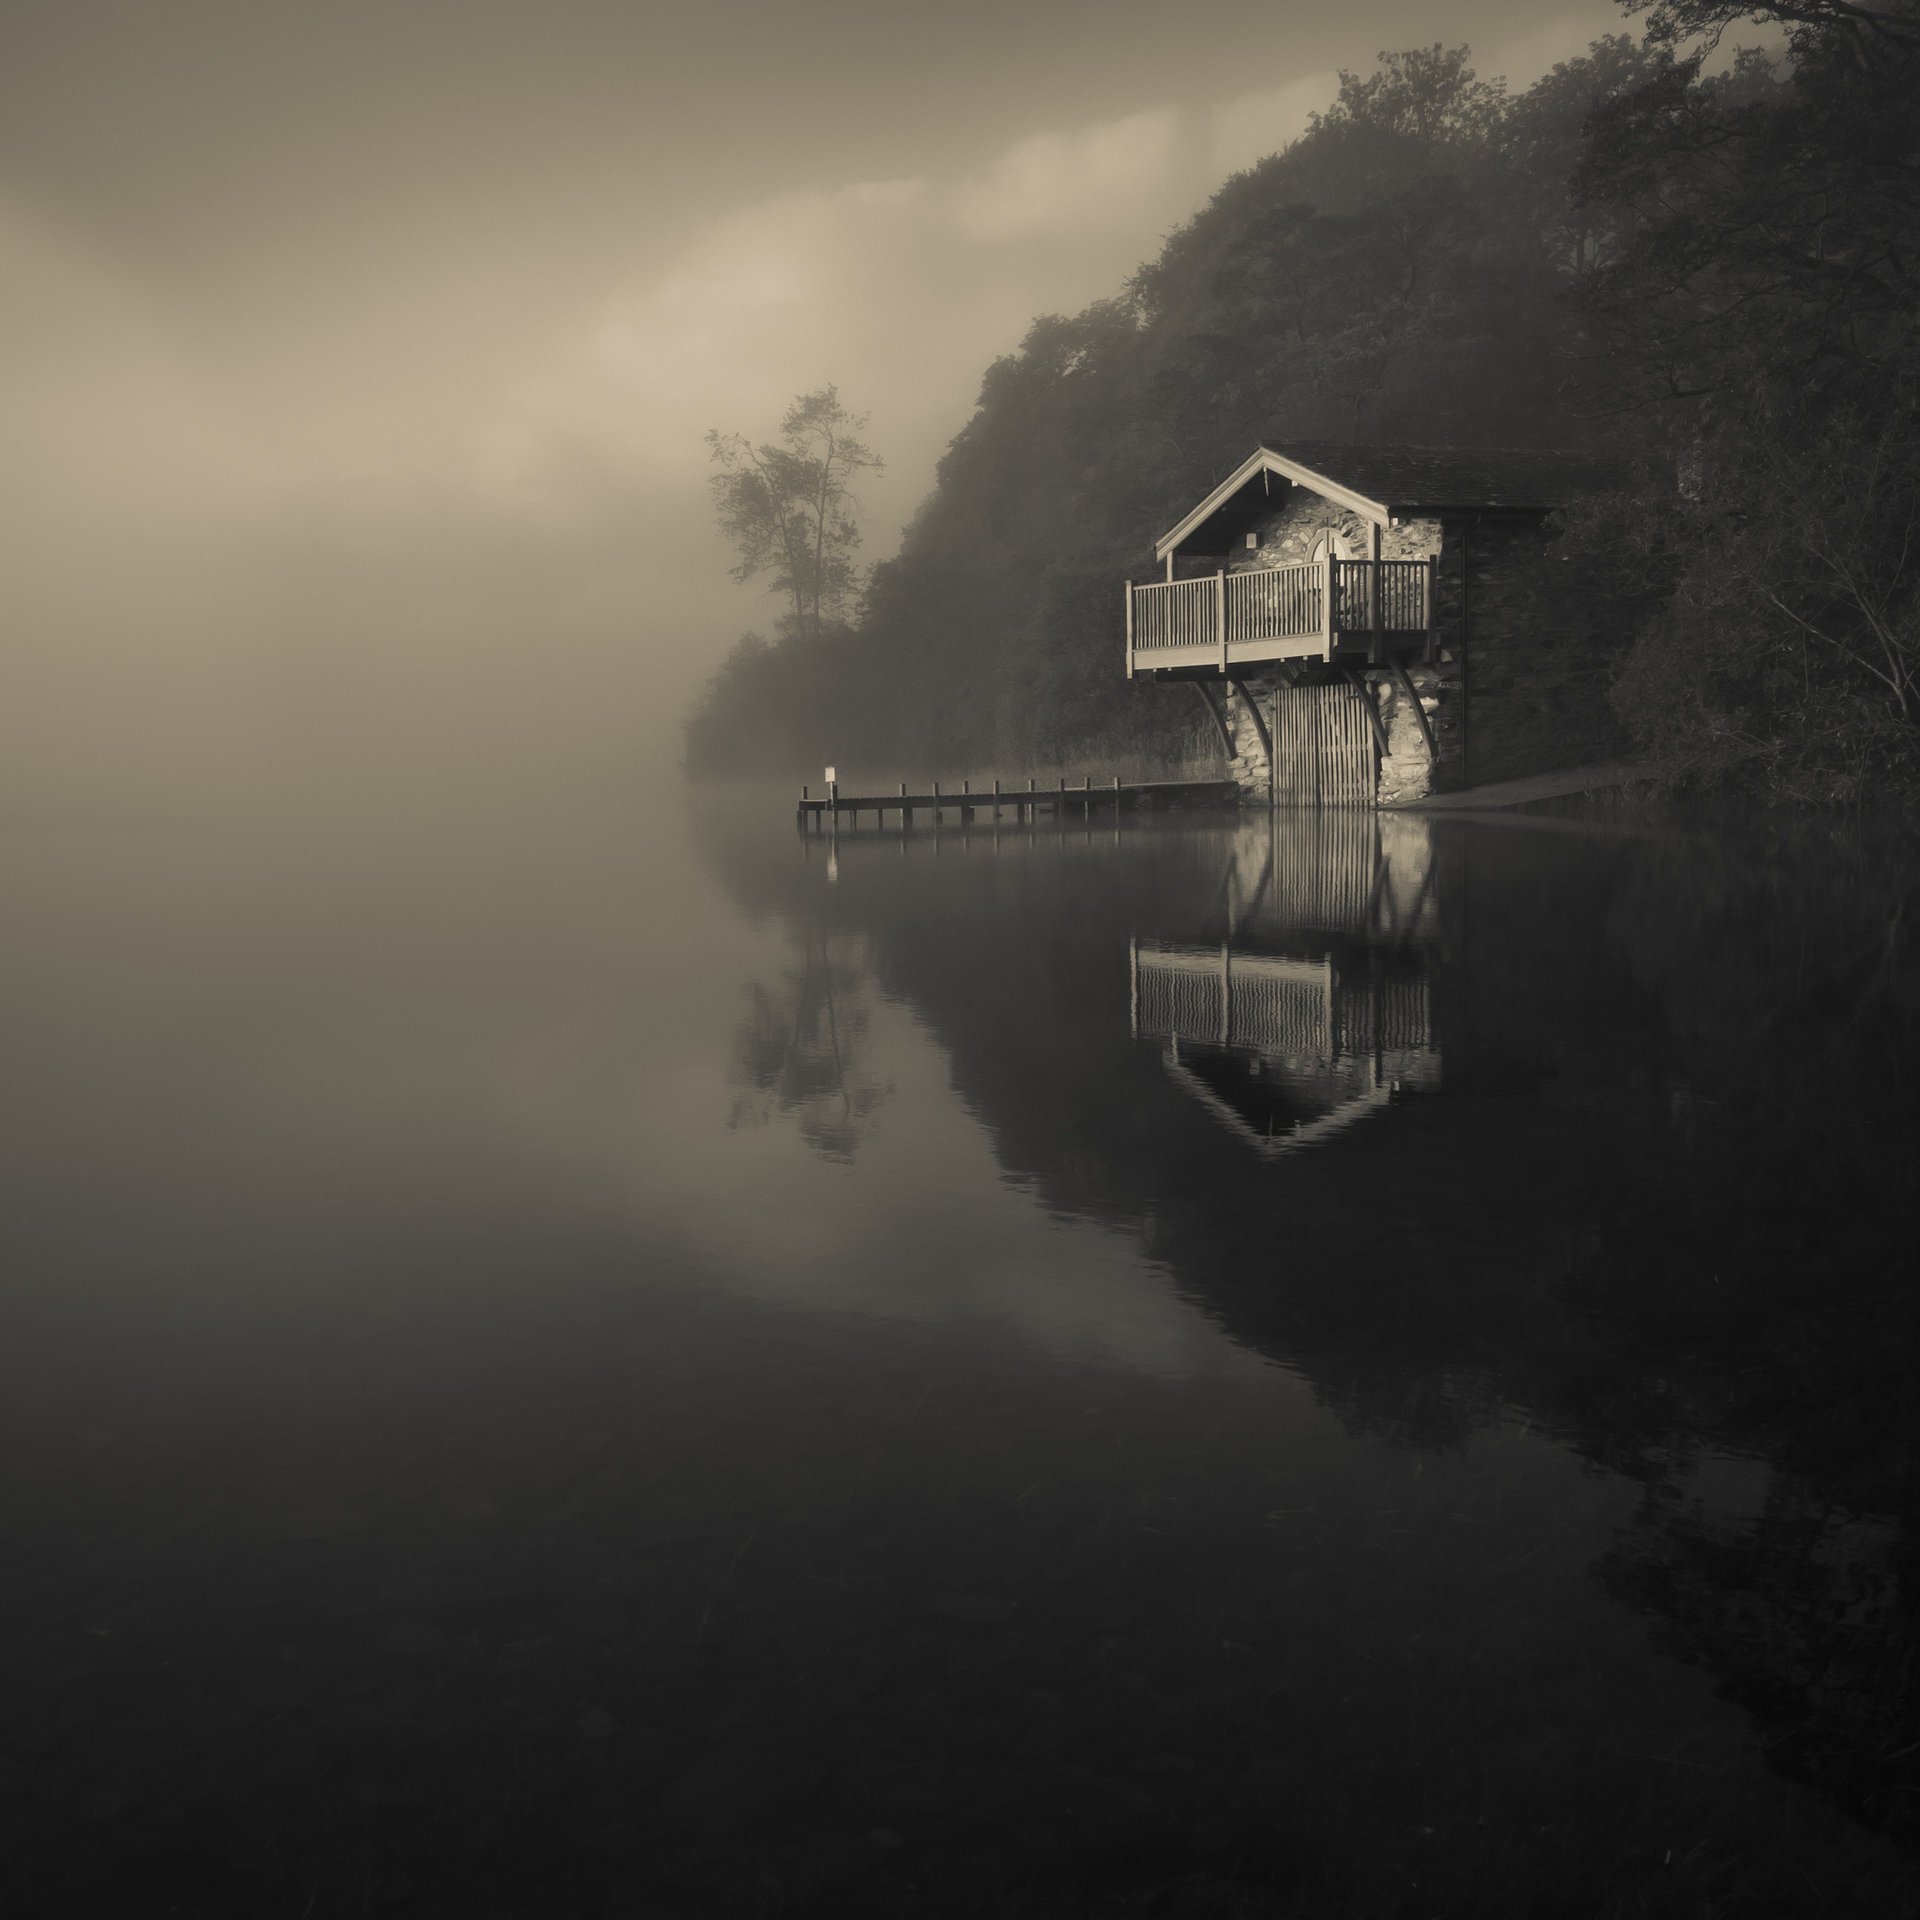 bateau rivière brouillard nature obscurité